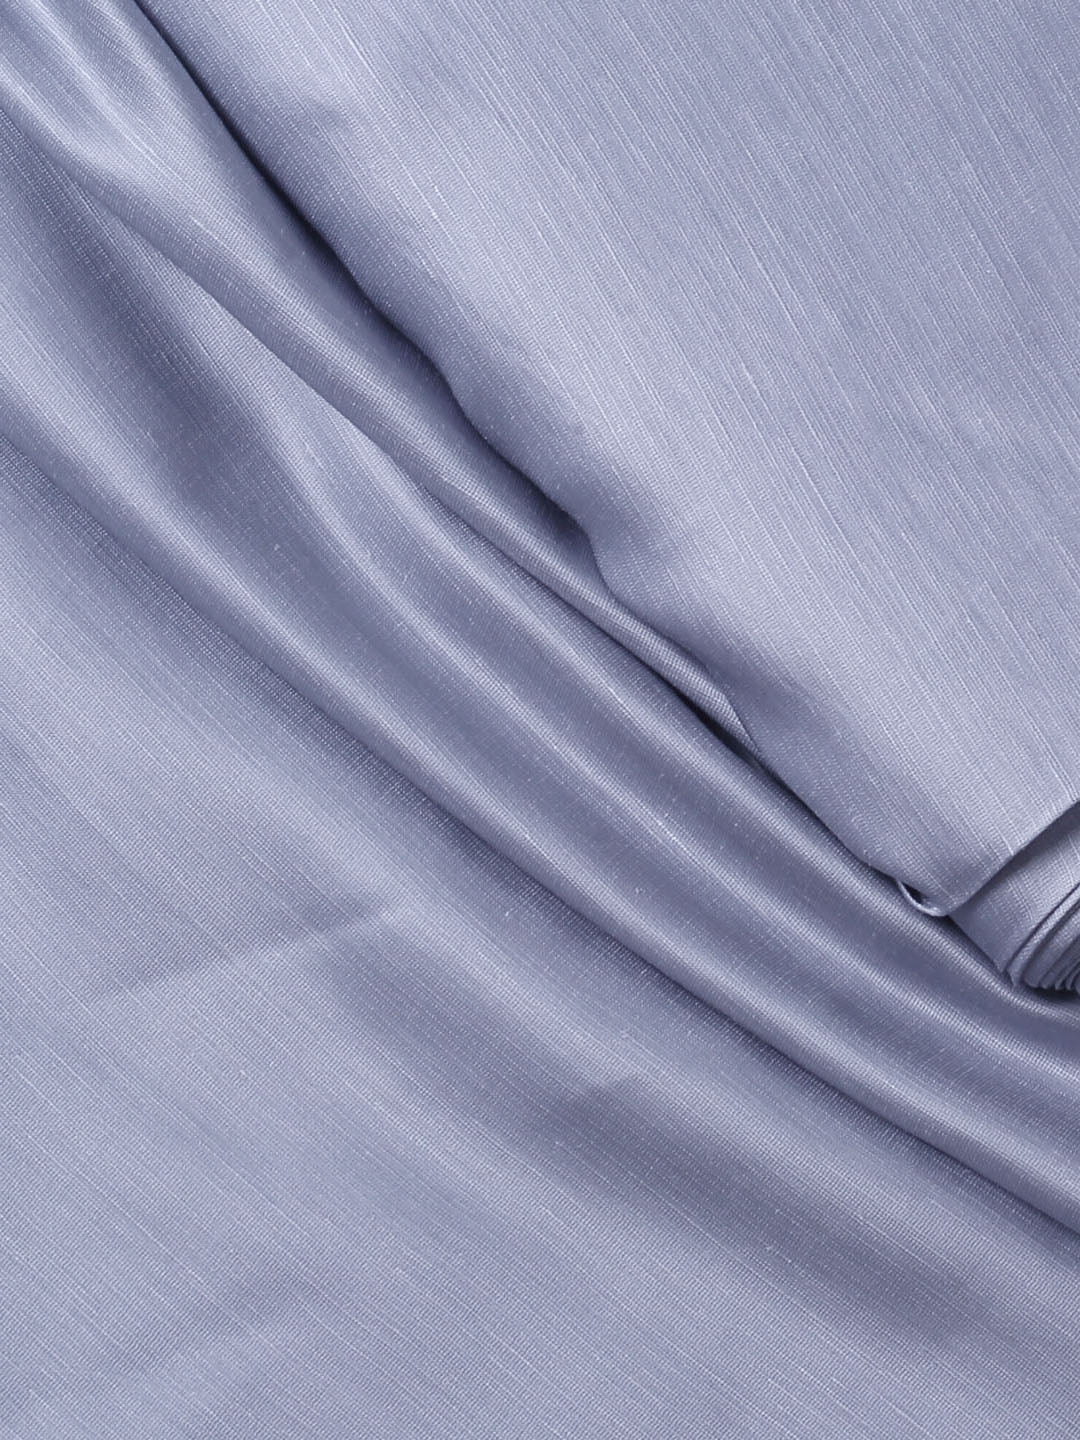 Bluish Grey Linen Satin Fabric